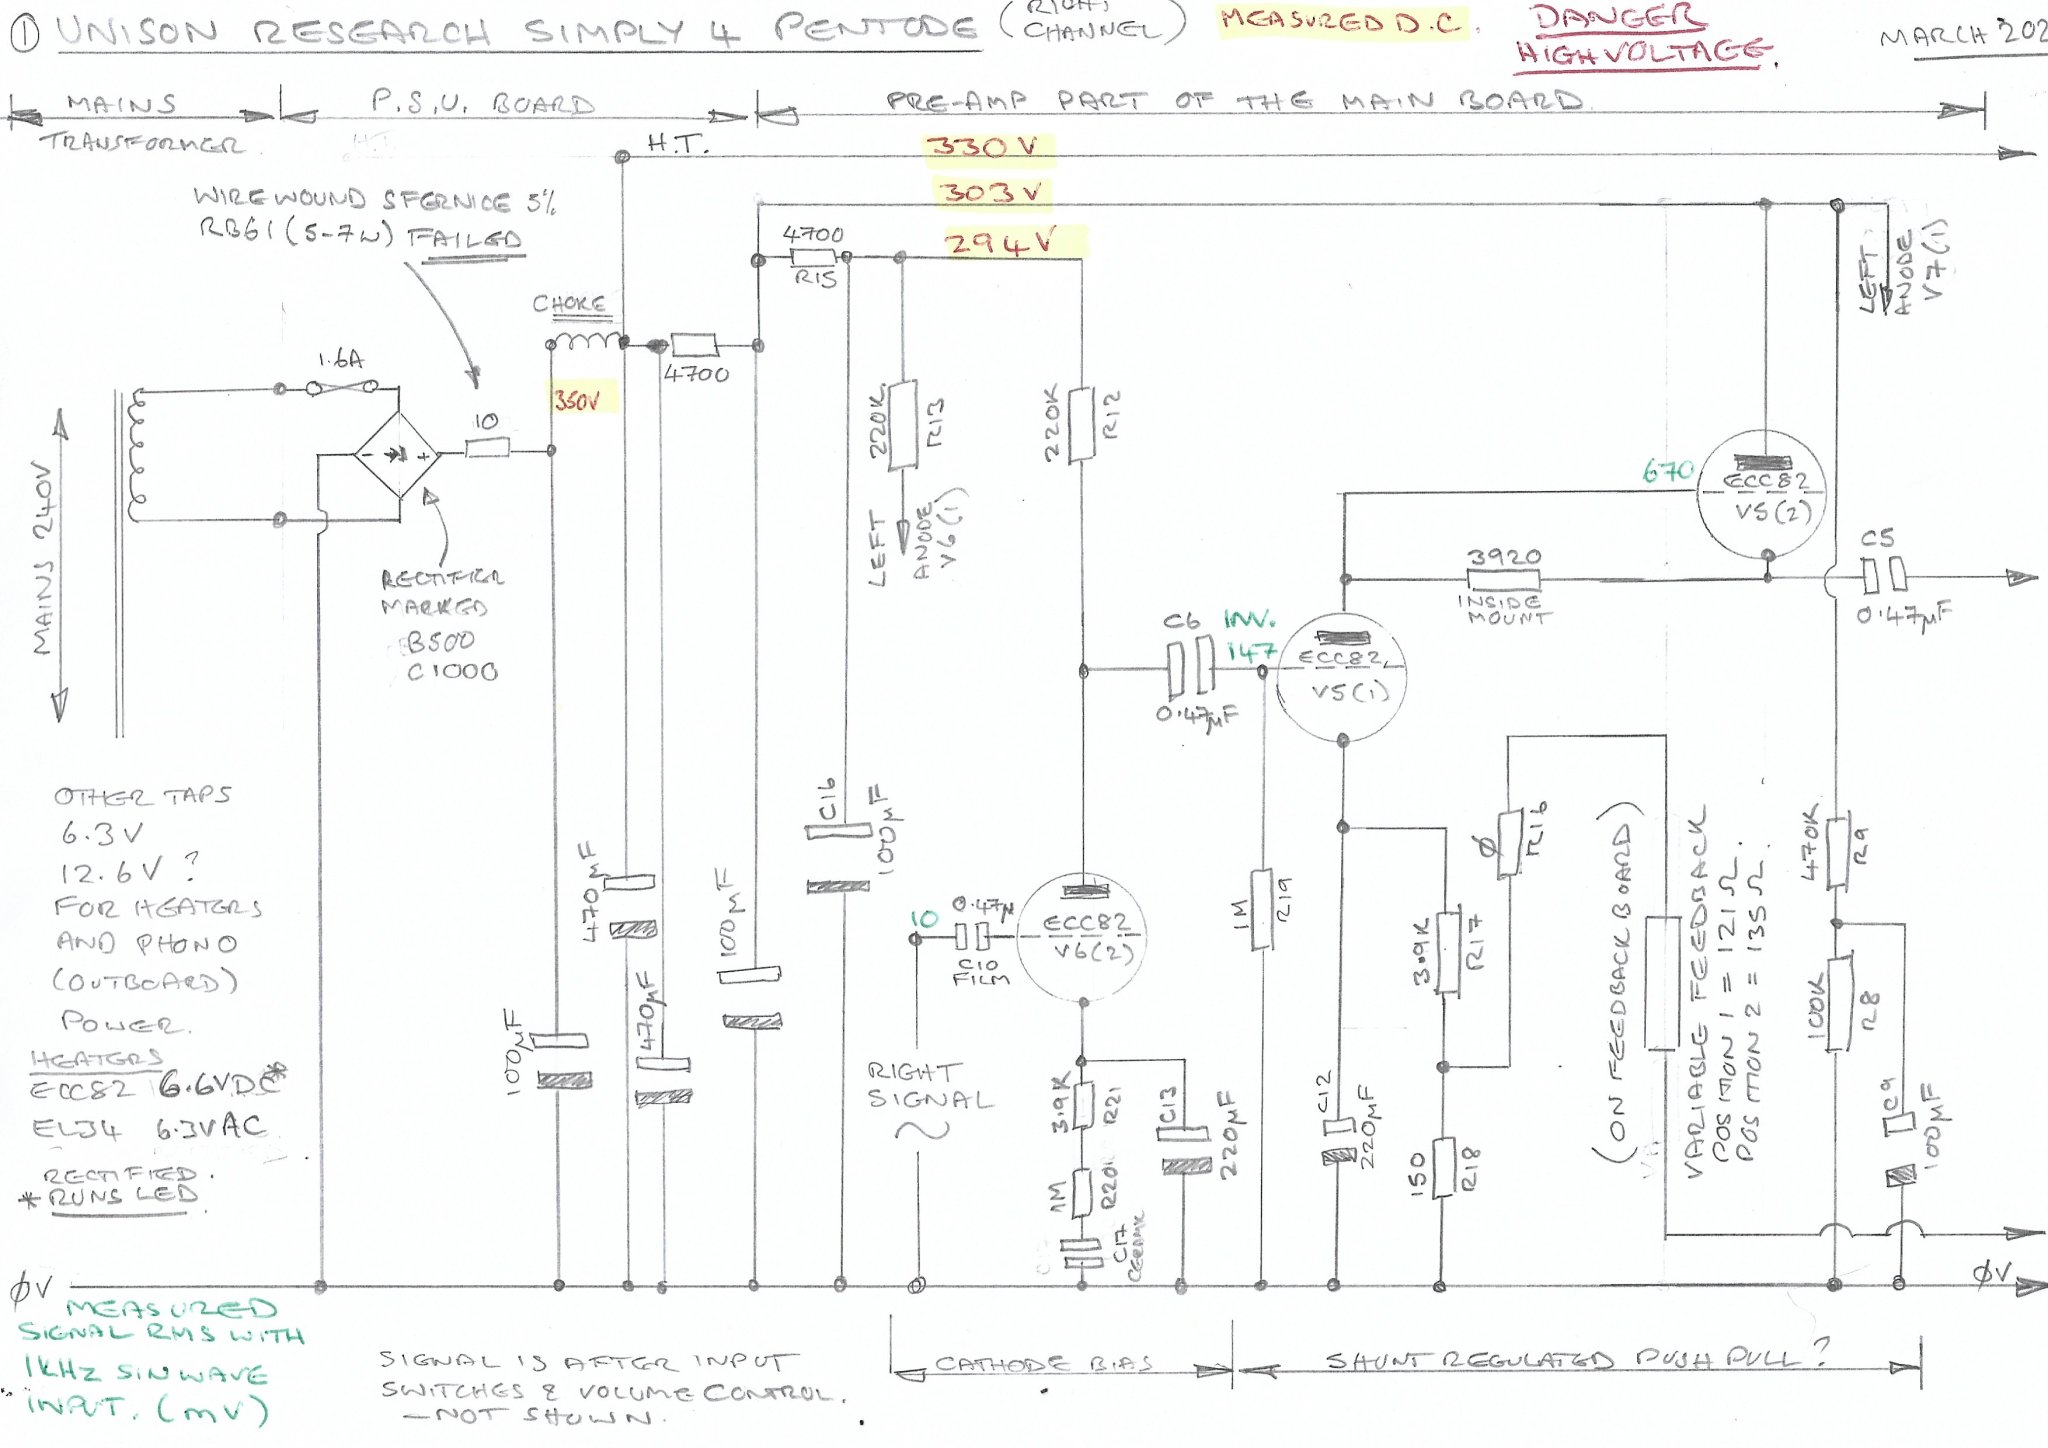 Unison Research S4P schematic 1 of 2.jpg